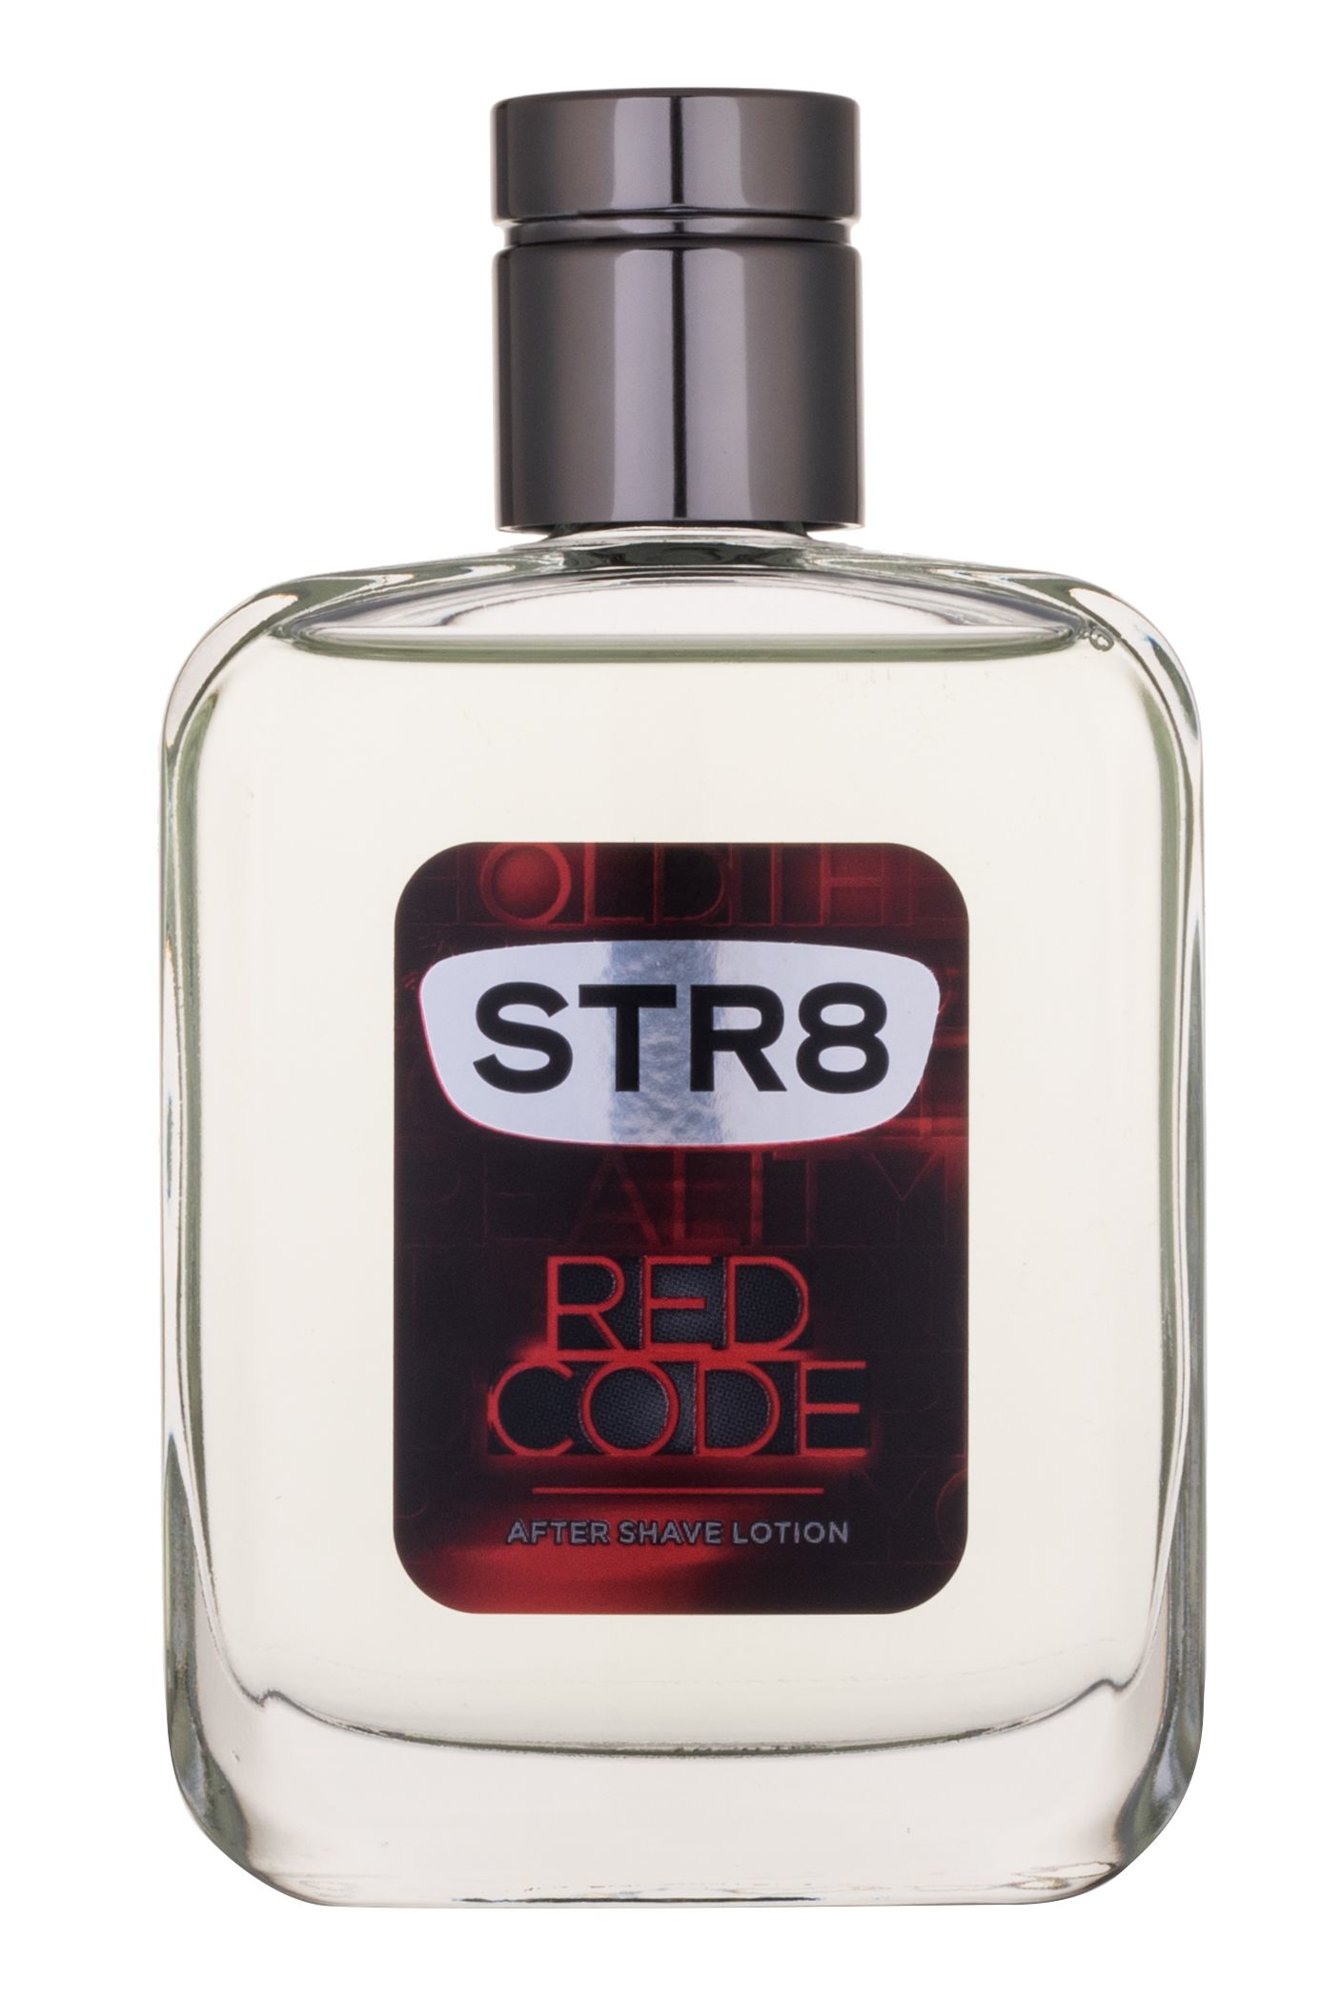 STR8 Red Code vanduo po skutimosi